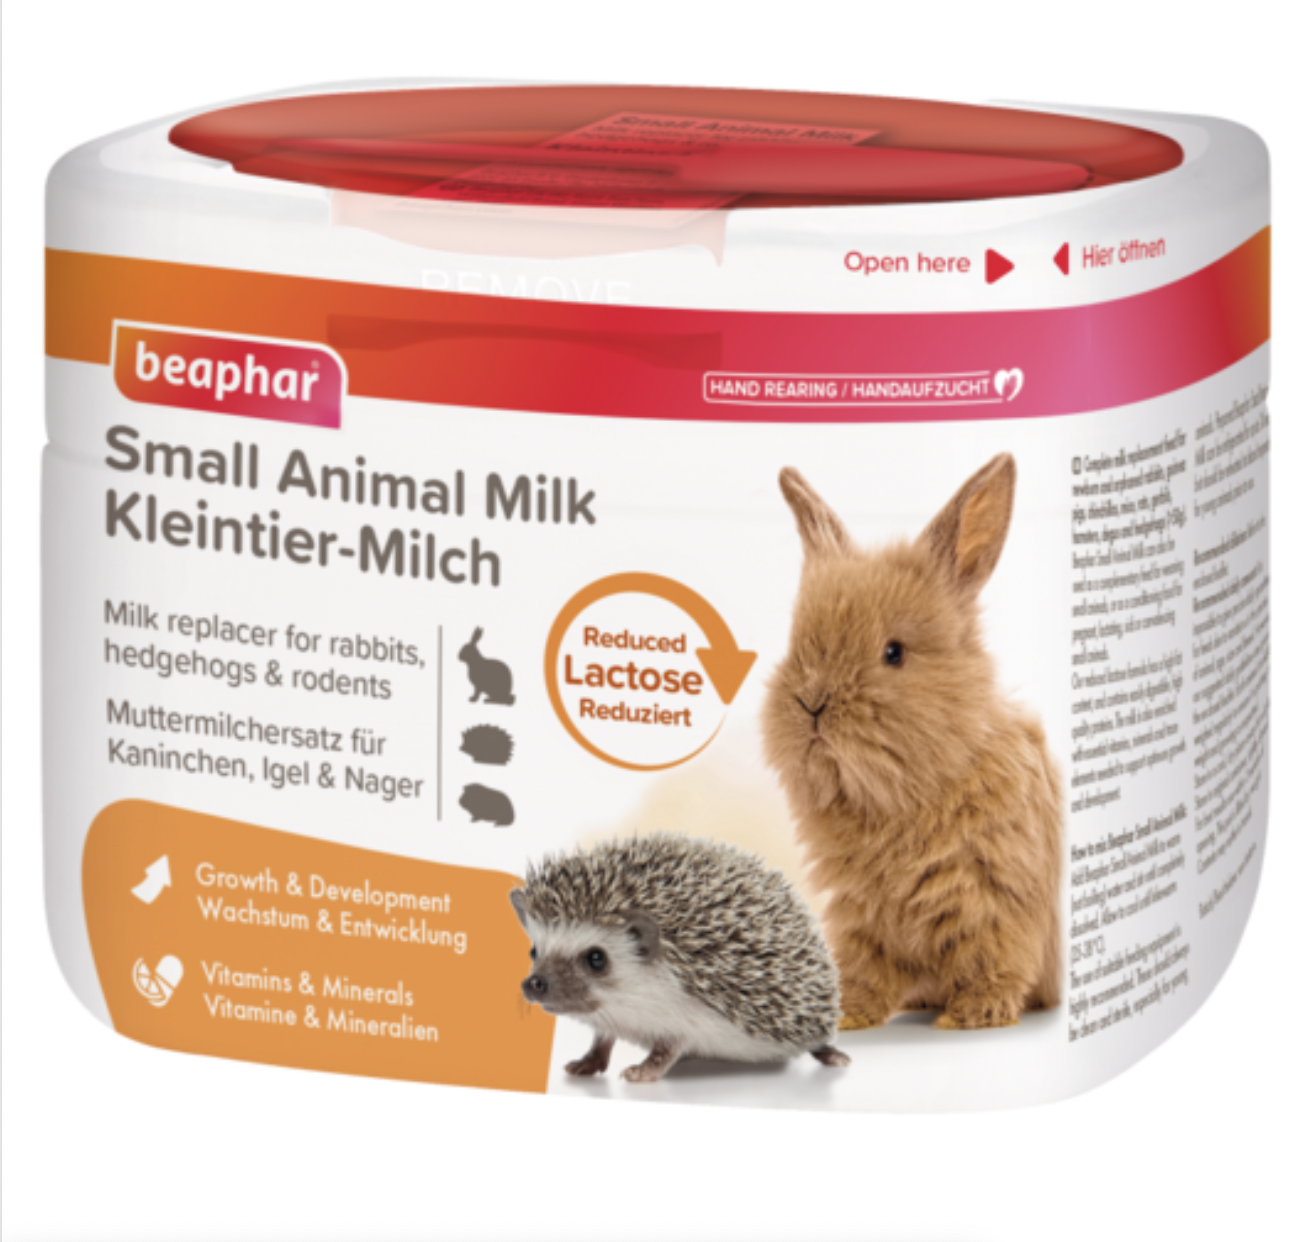 Beaphar Small Animal Milk food for pregnant, lactating, sick Pets Hand rearing